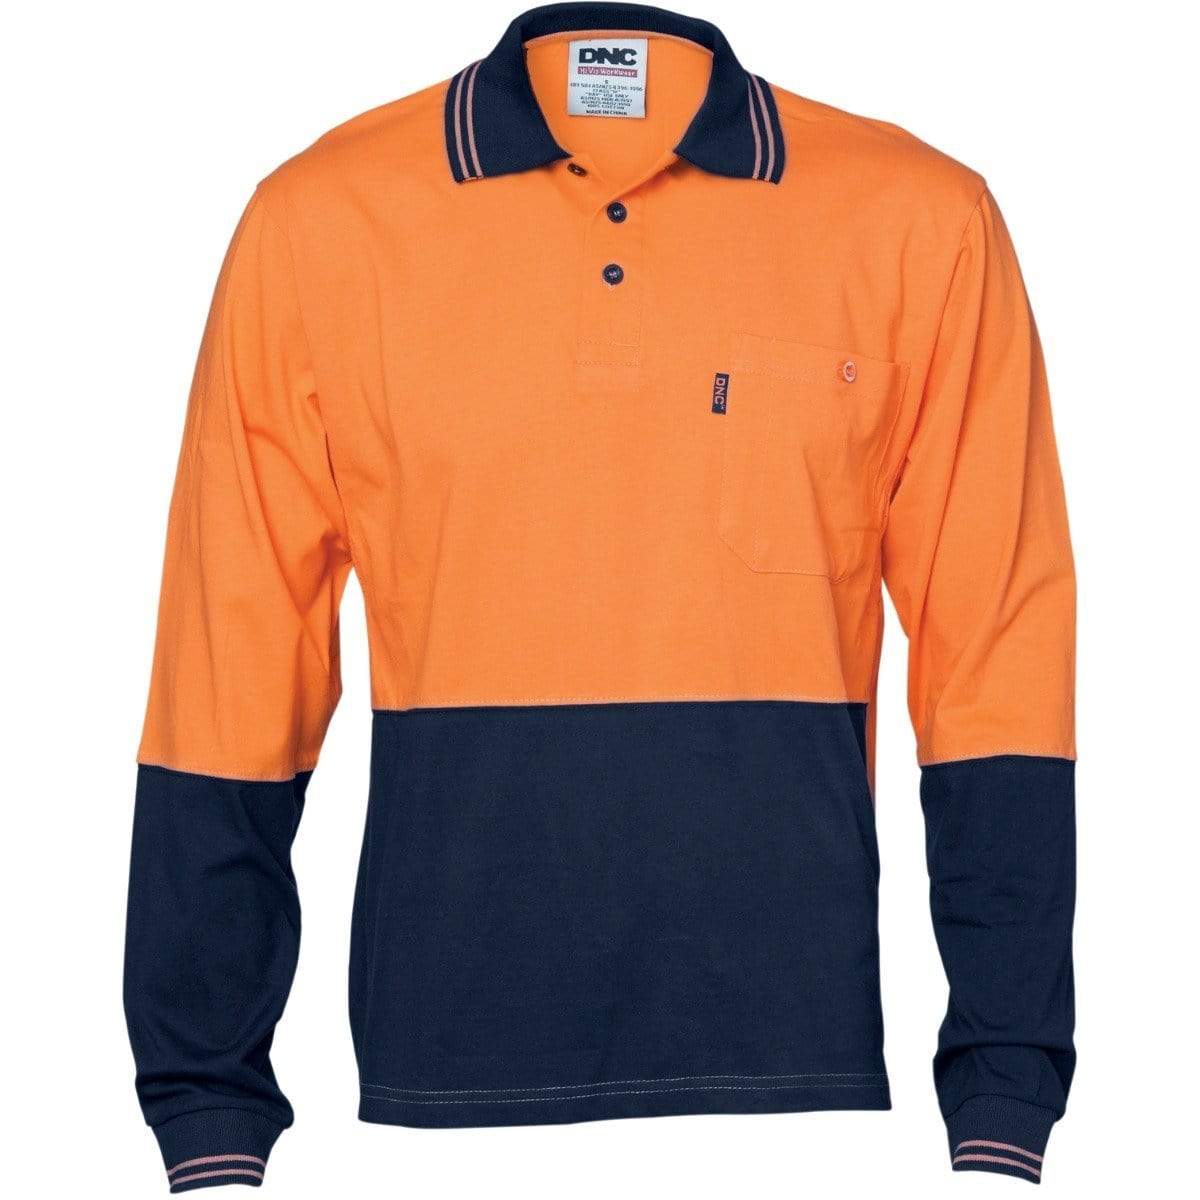 Dnc Workwear Hi-vis Cool-breeze Cotton Jersey Long Sleeve Polo Shirt With Underarm Cotton Mesh - 3846 Work Wear DNC Workwear Orange/Navy XS 